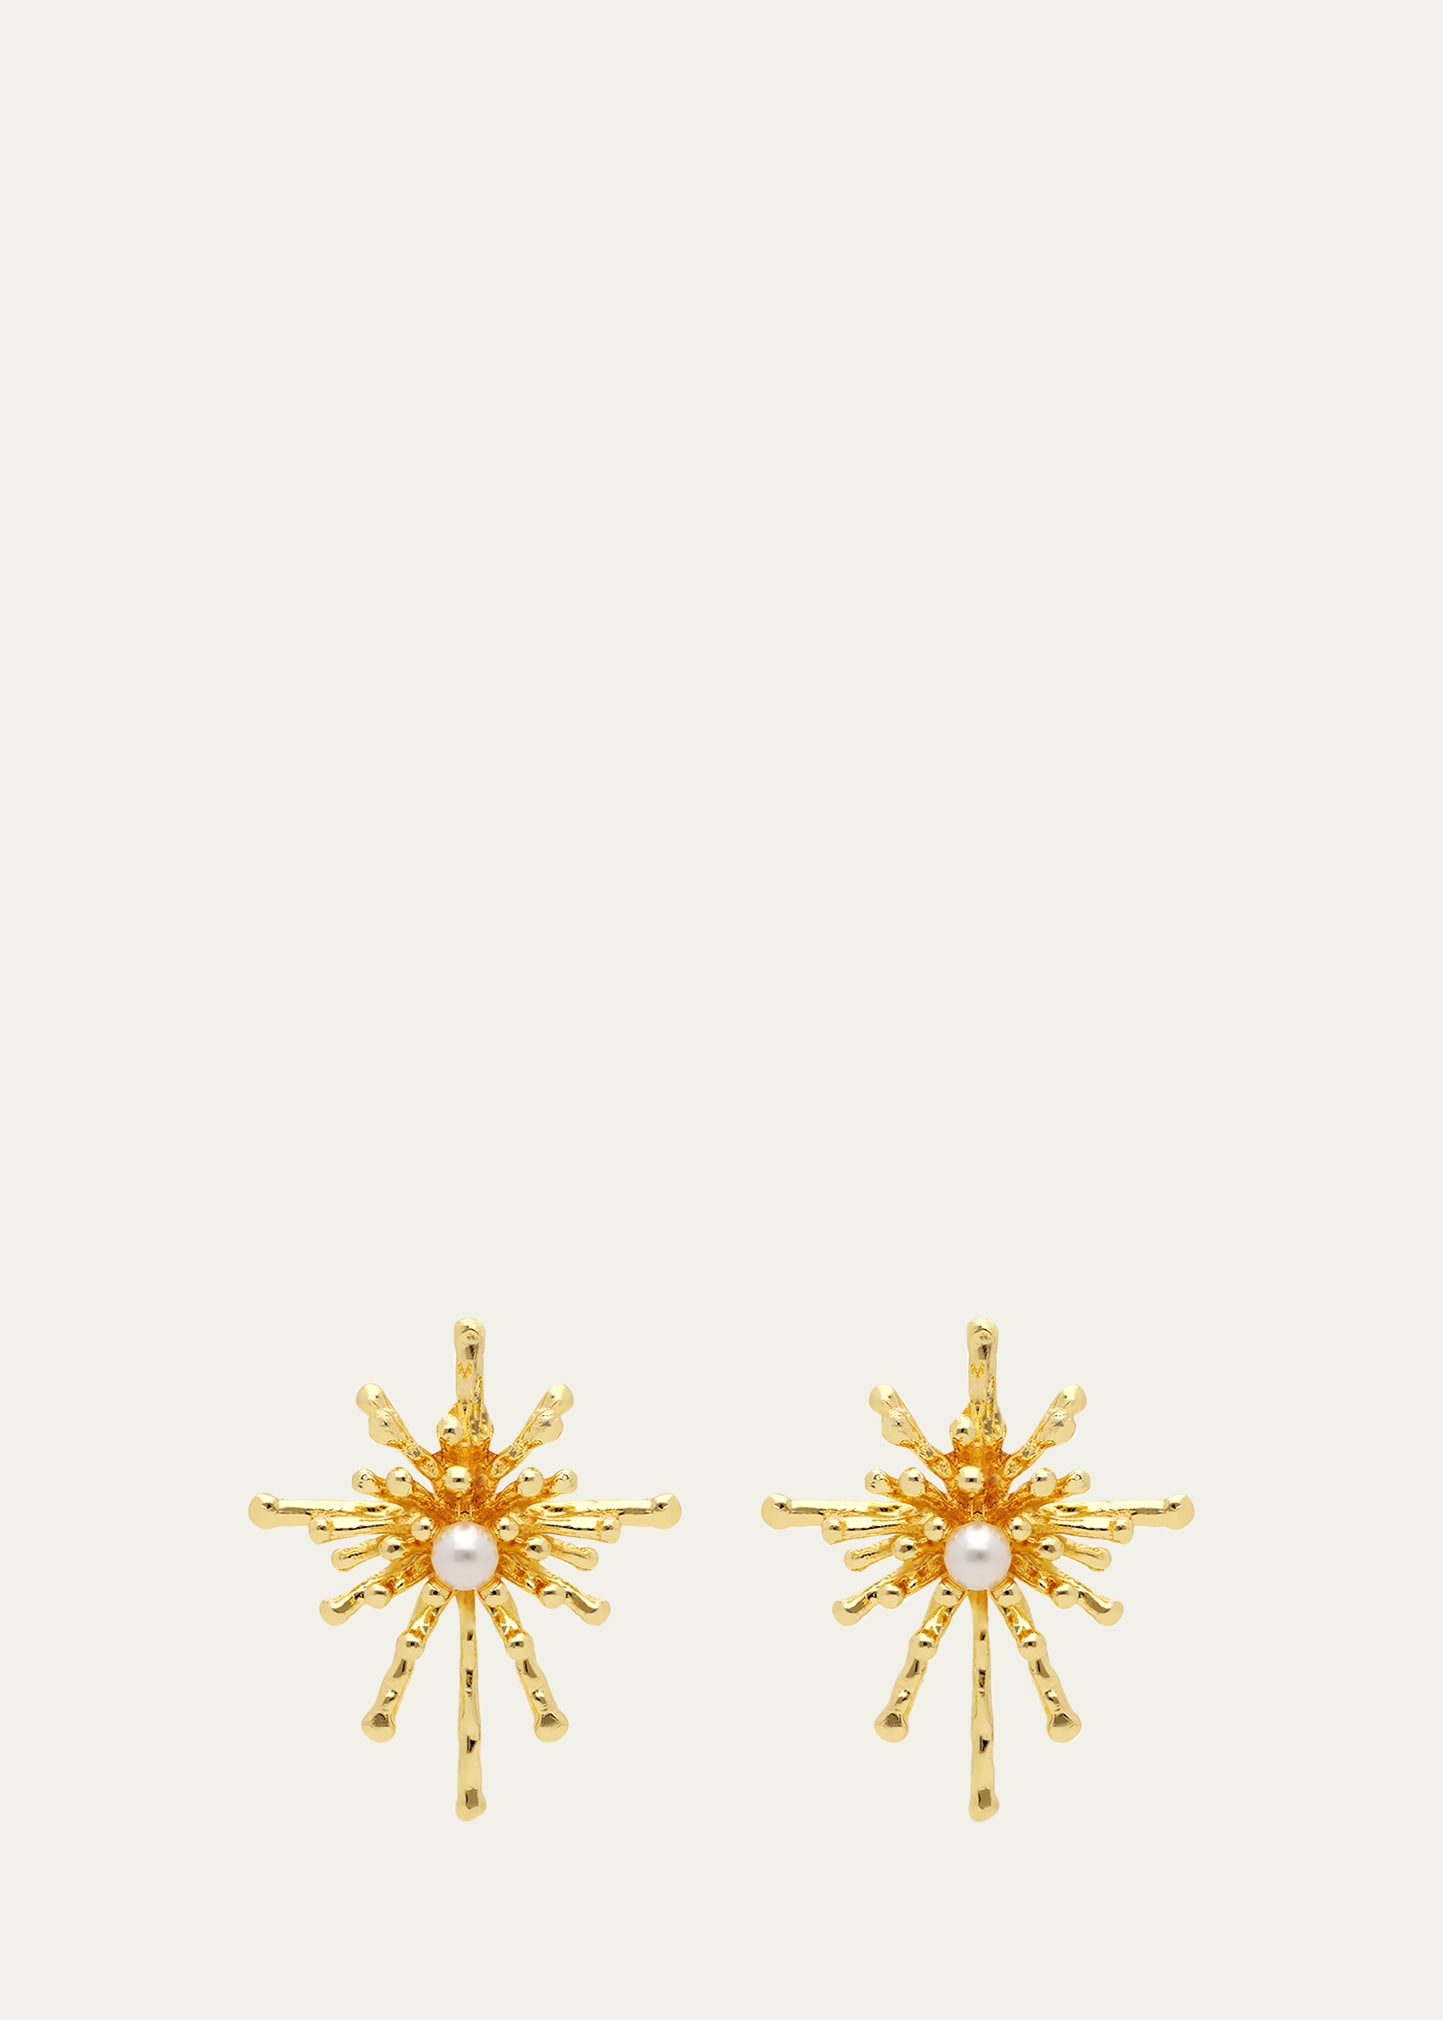 18K Gold Nova Earrings with Freshwater Pearls